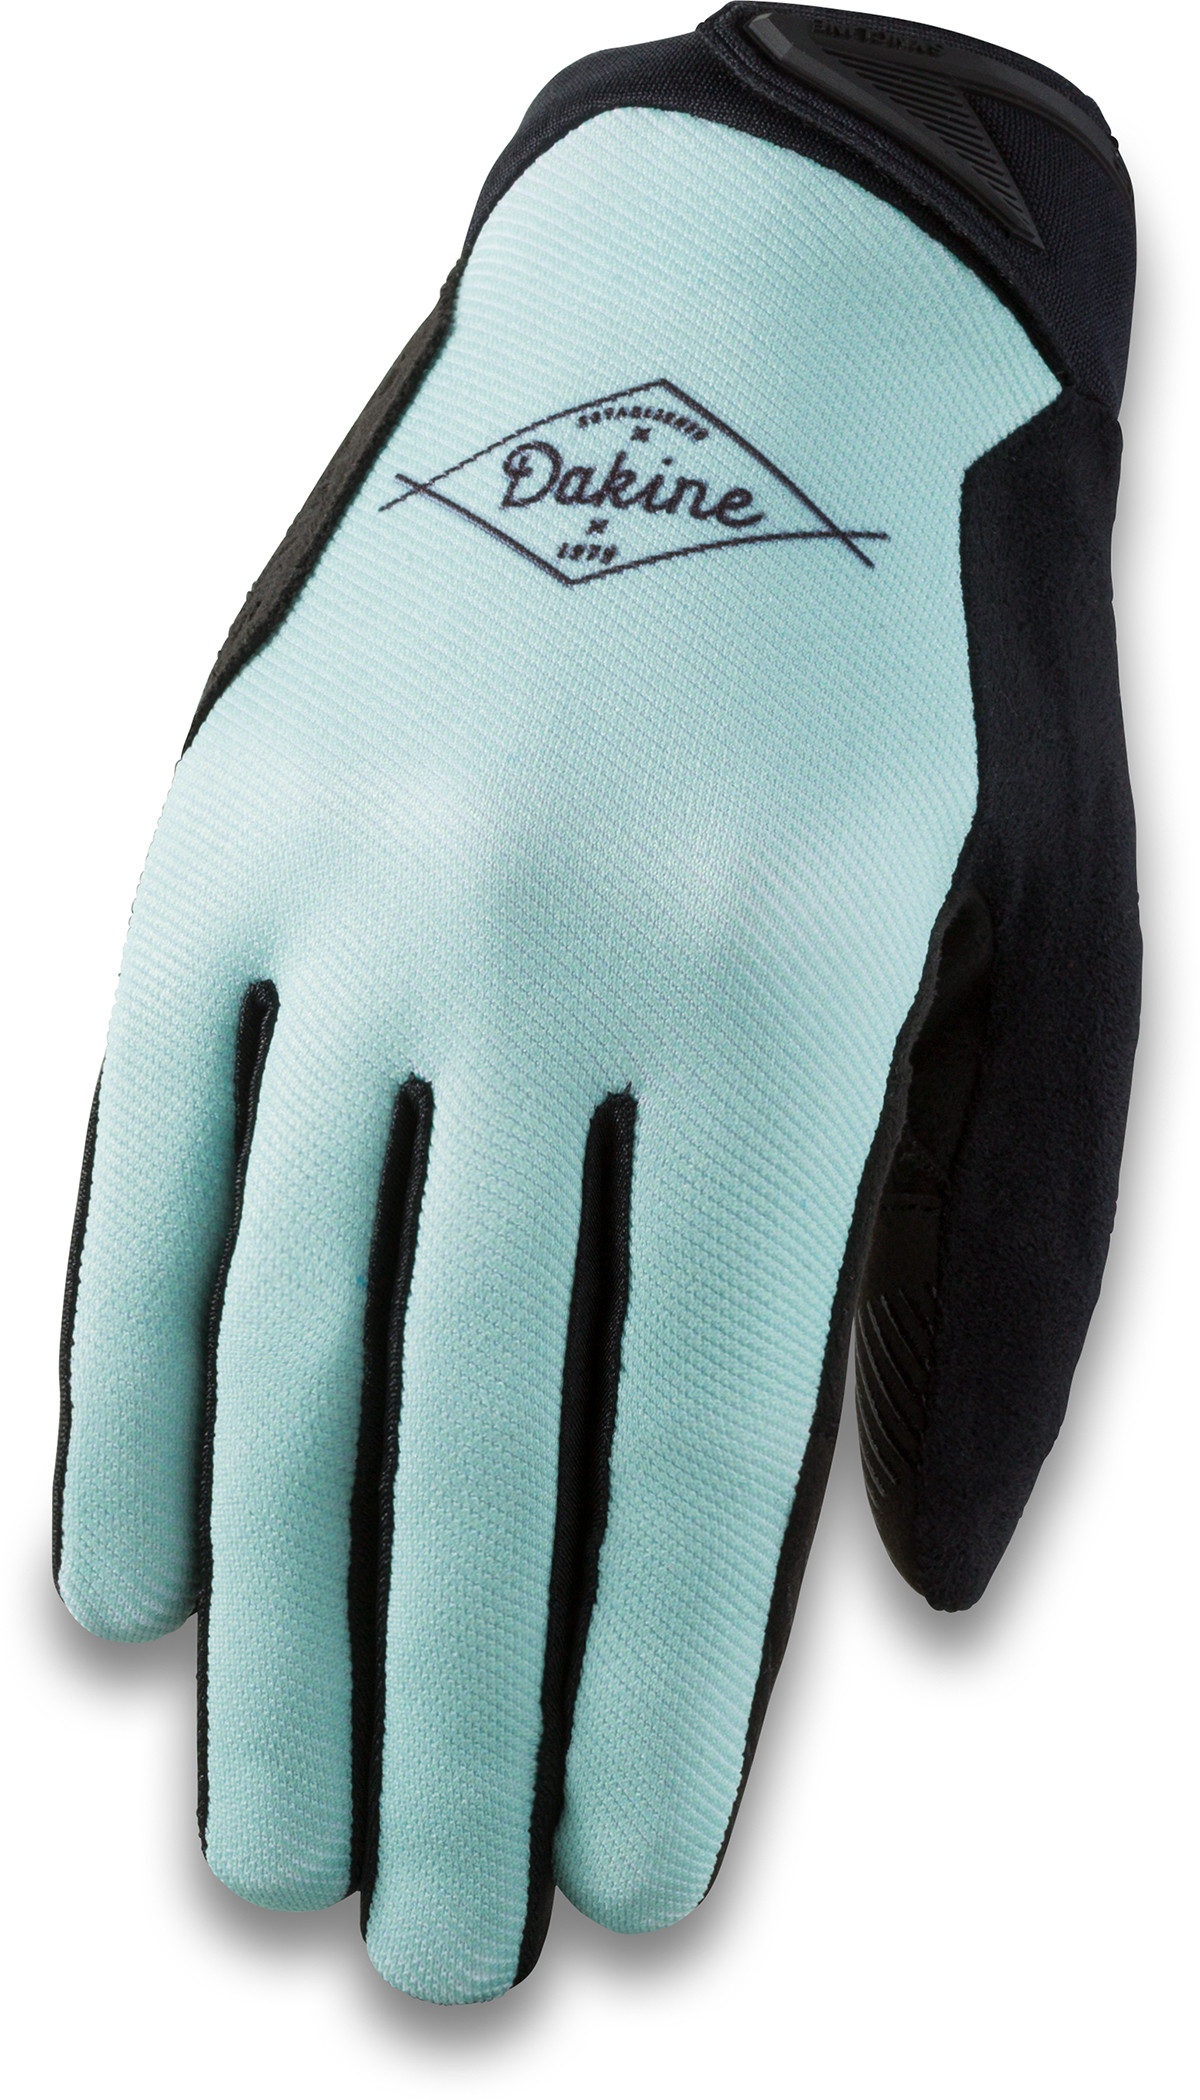 Syncline Bike Glove - Women's